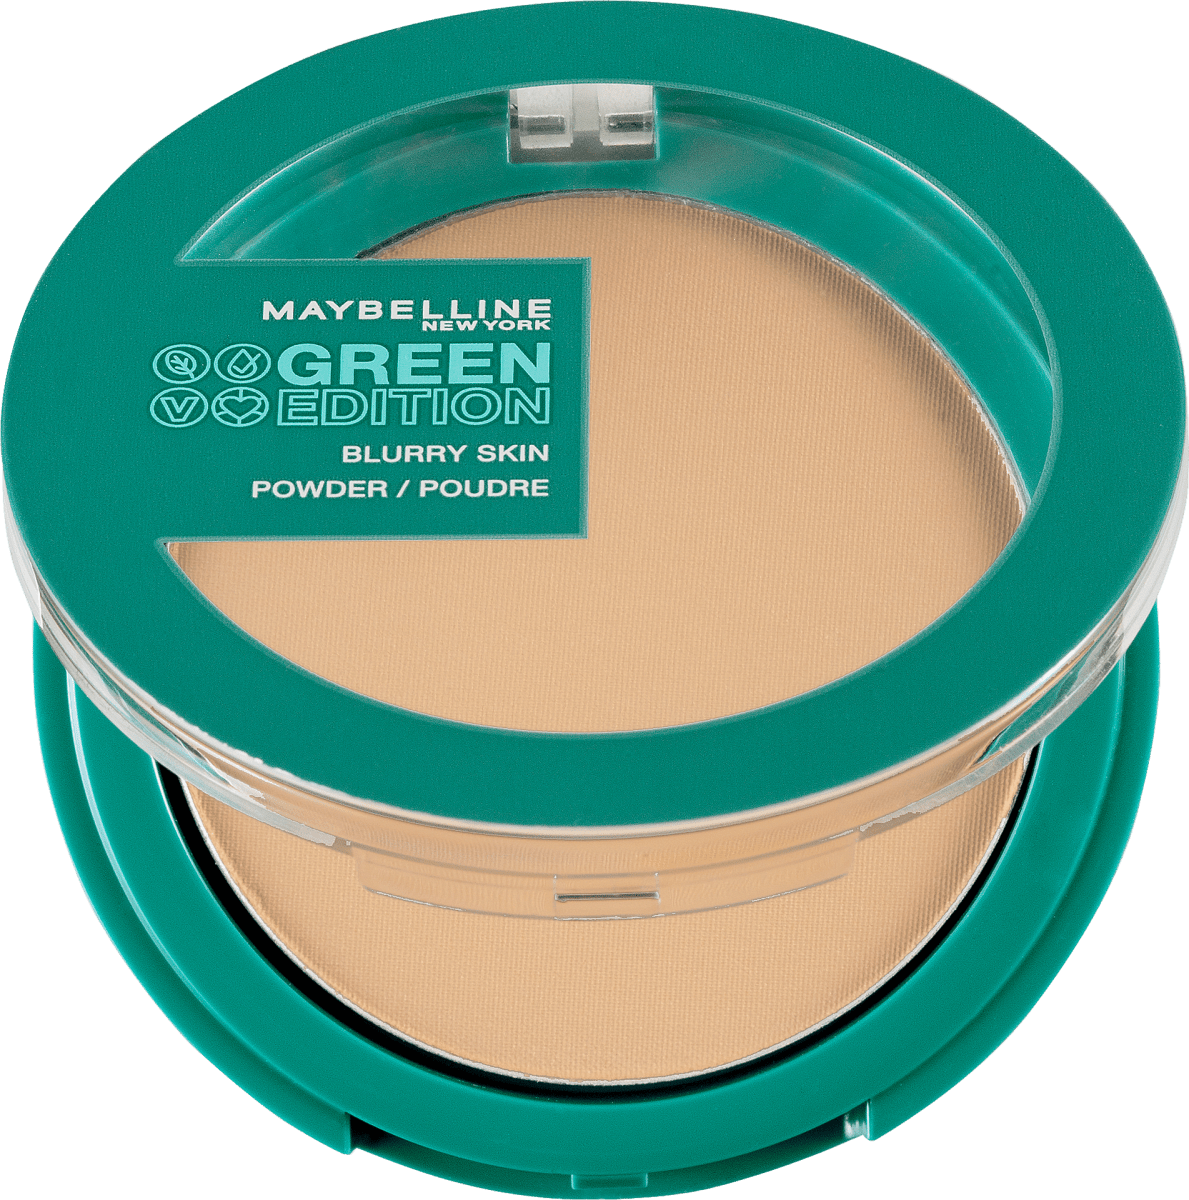 MAYBELLINE NEW YORK Green Edition matující pudr Blurry Skin 35 light, 9 g